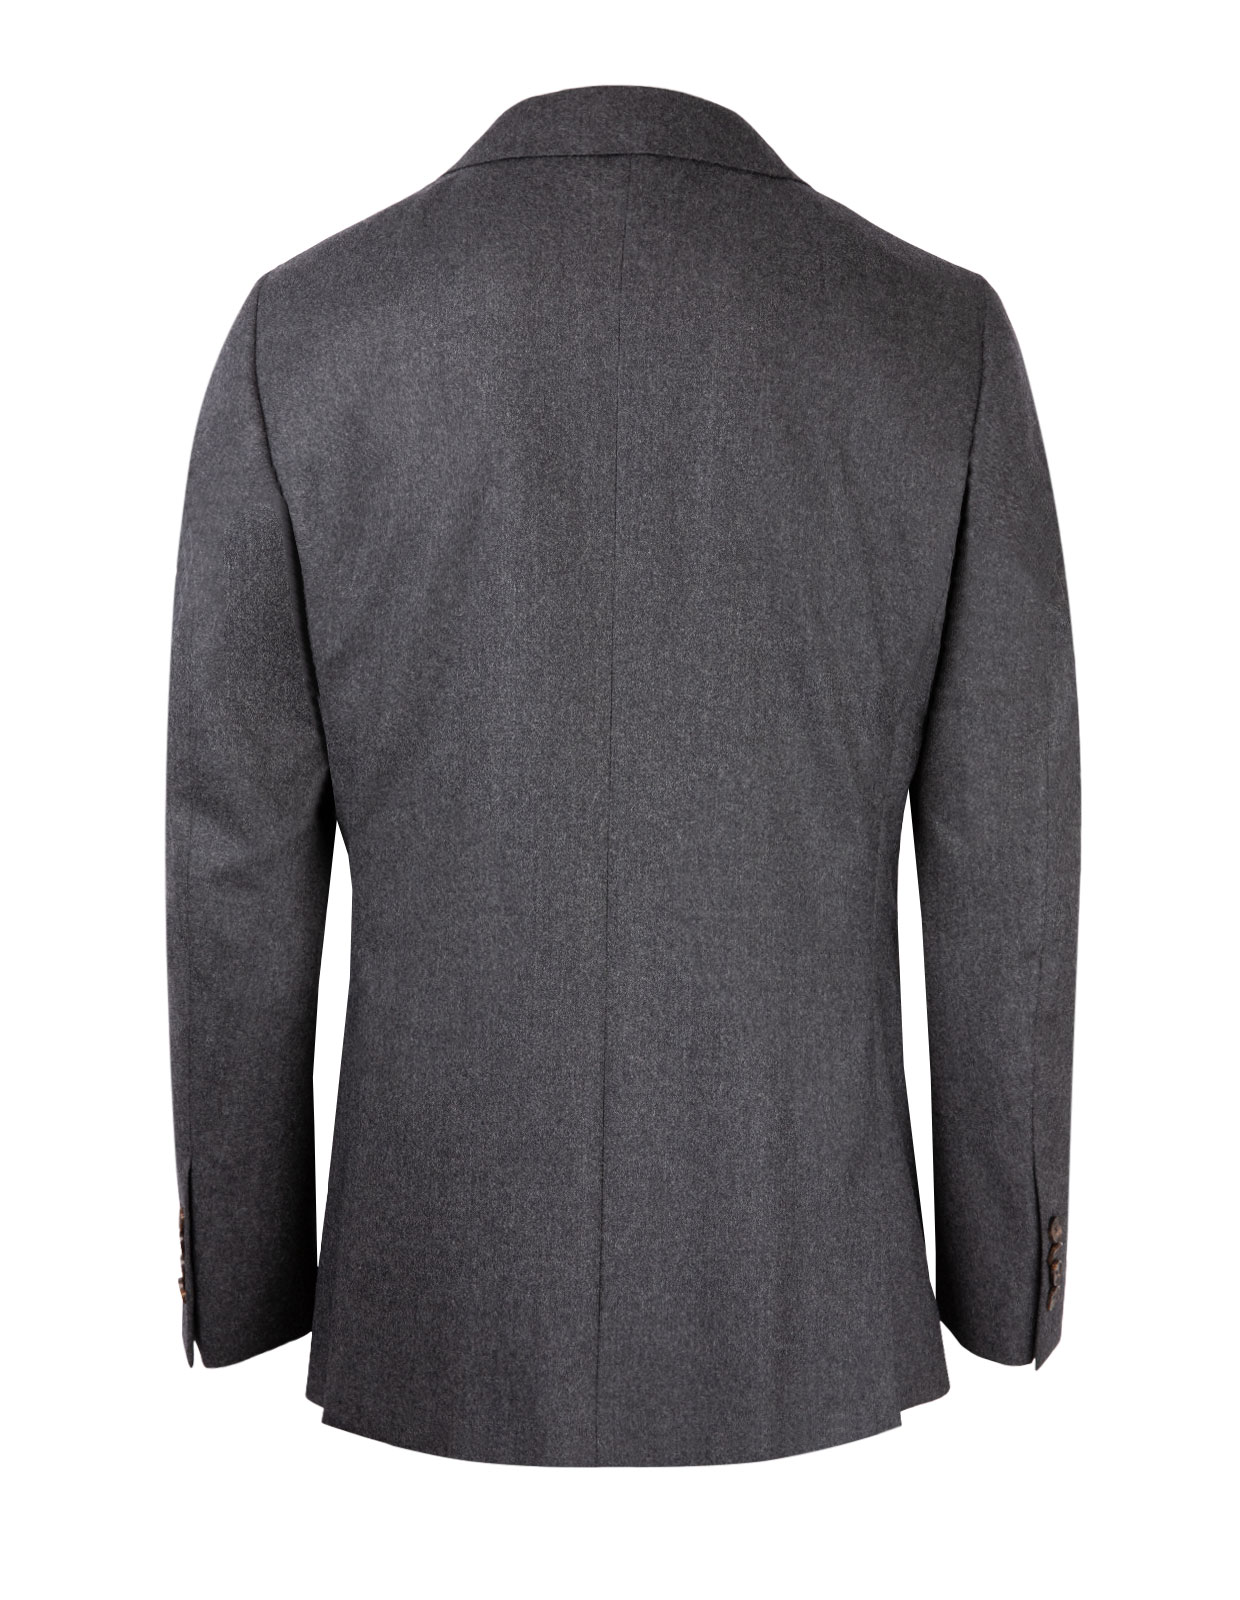 Frederick Jacket Wool Flannel Antracite Stl D108